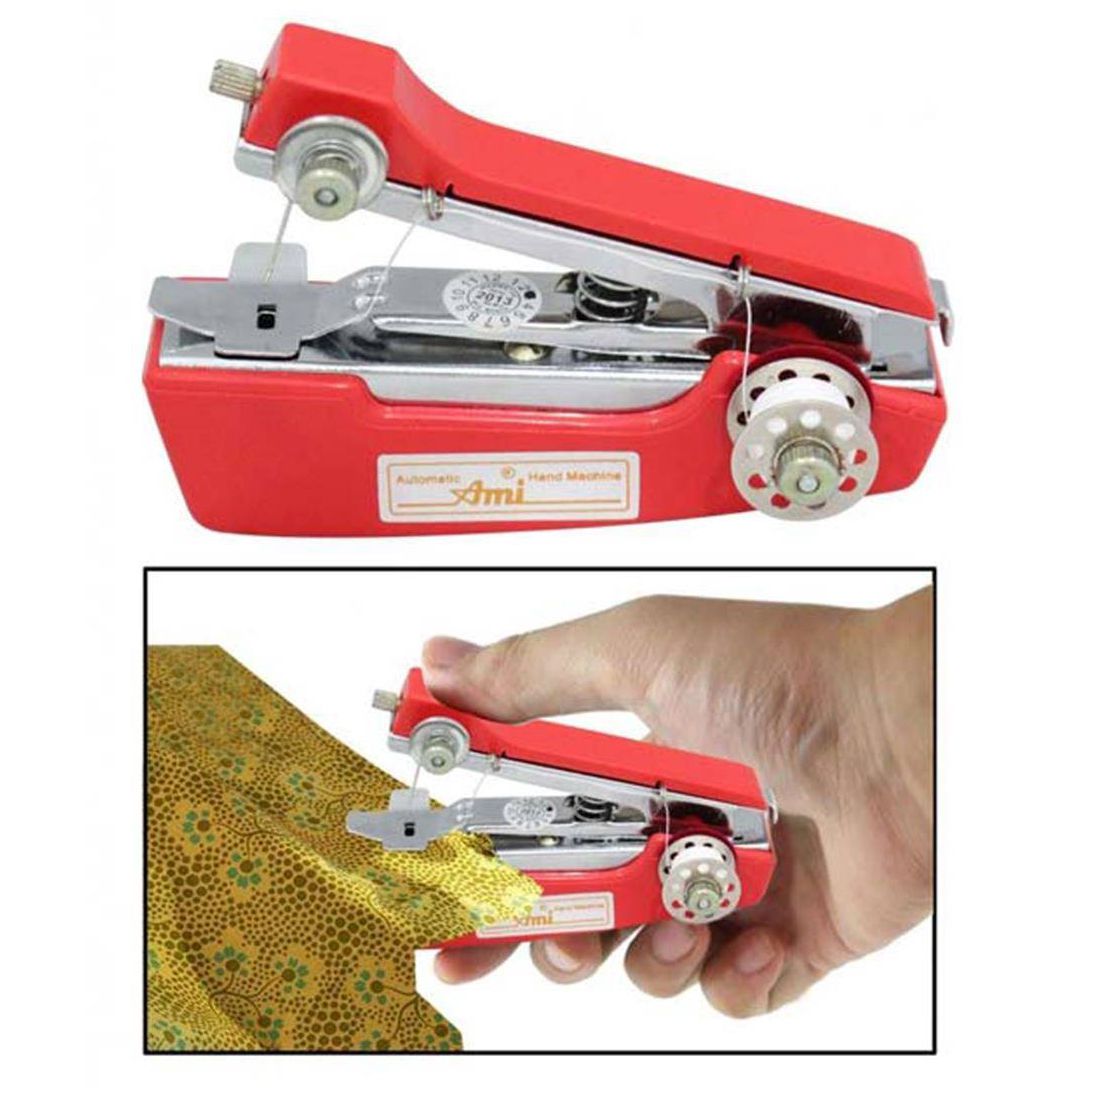 Ami hand sewing machine instruction manual